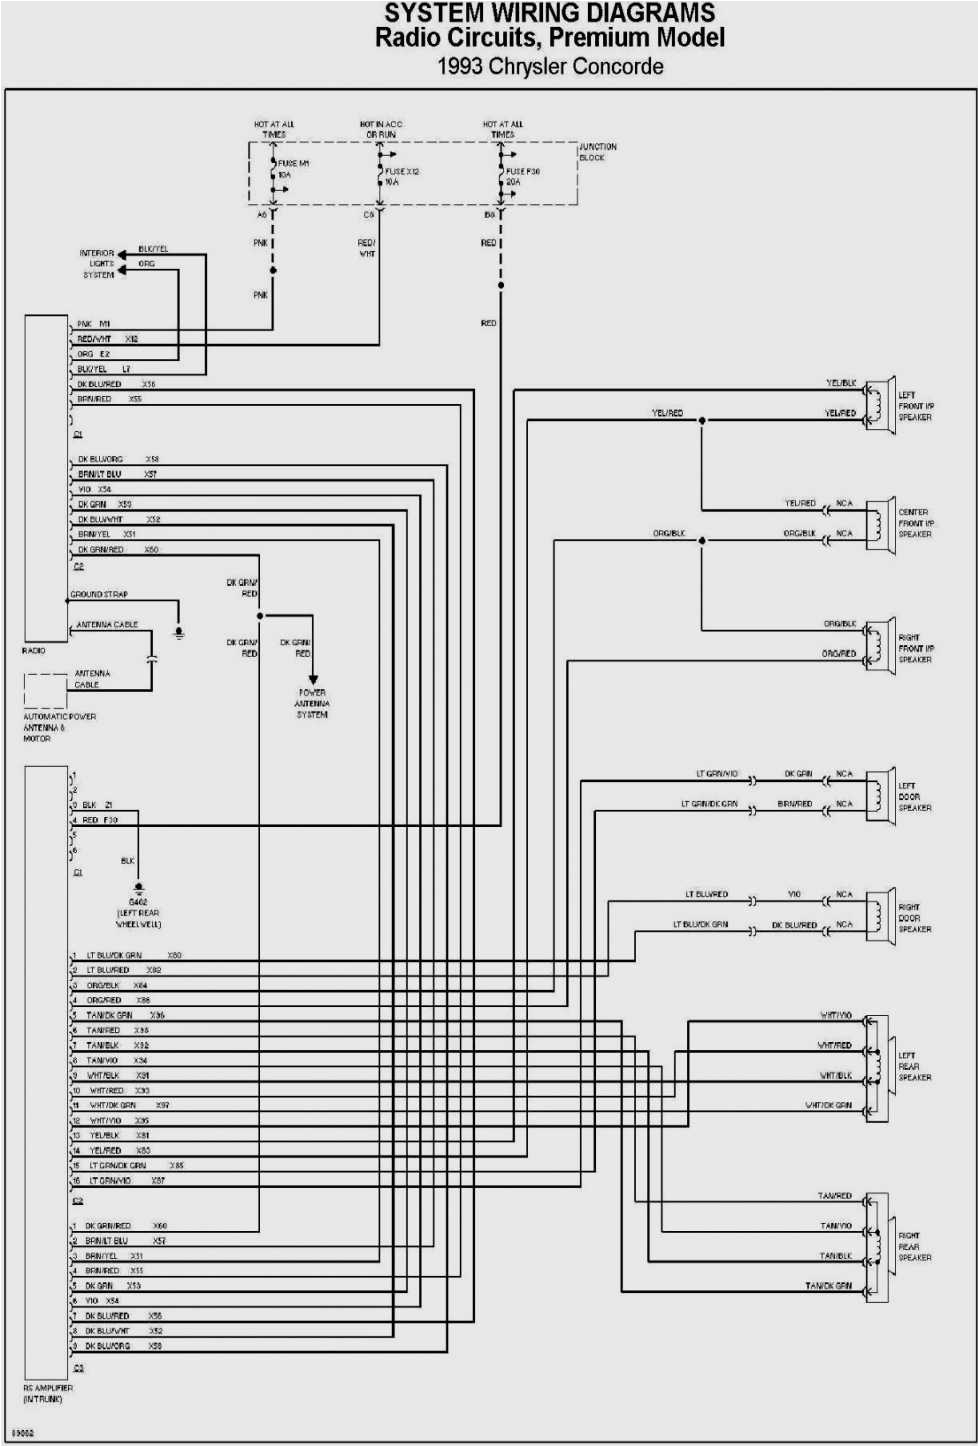 sony cdx gt240 wiring diagram wiring diagrams on a sony xplod 52wx4 wiring diagram dodge